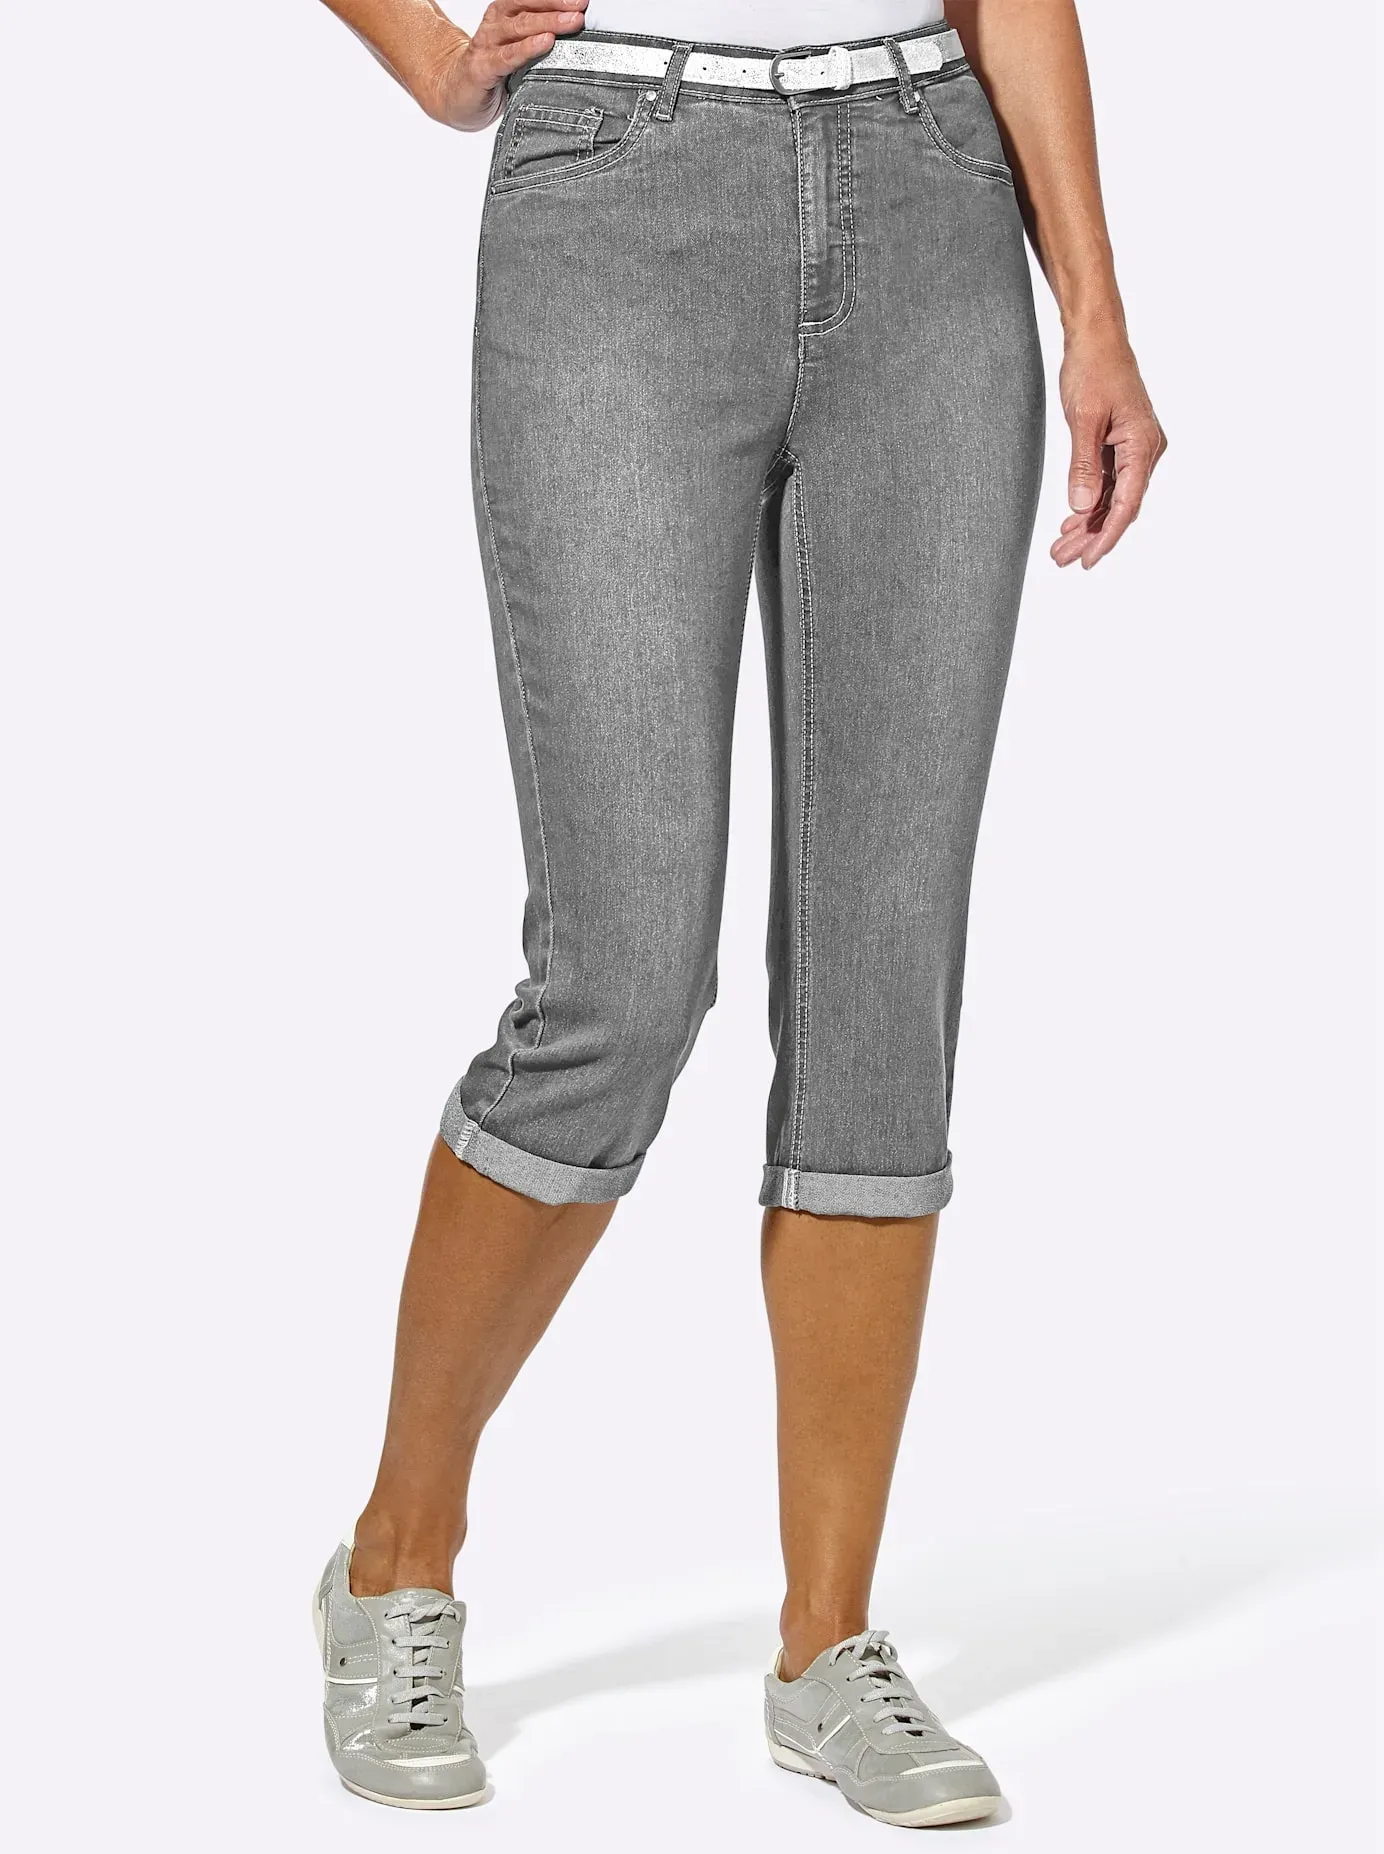 Caprijeans CASUAL LOOKS Gr. 48, Normalgrößen, grau (grey denim) Damen Jeans Caprijeans 3/4